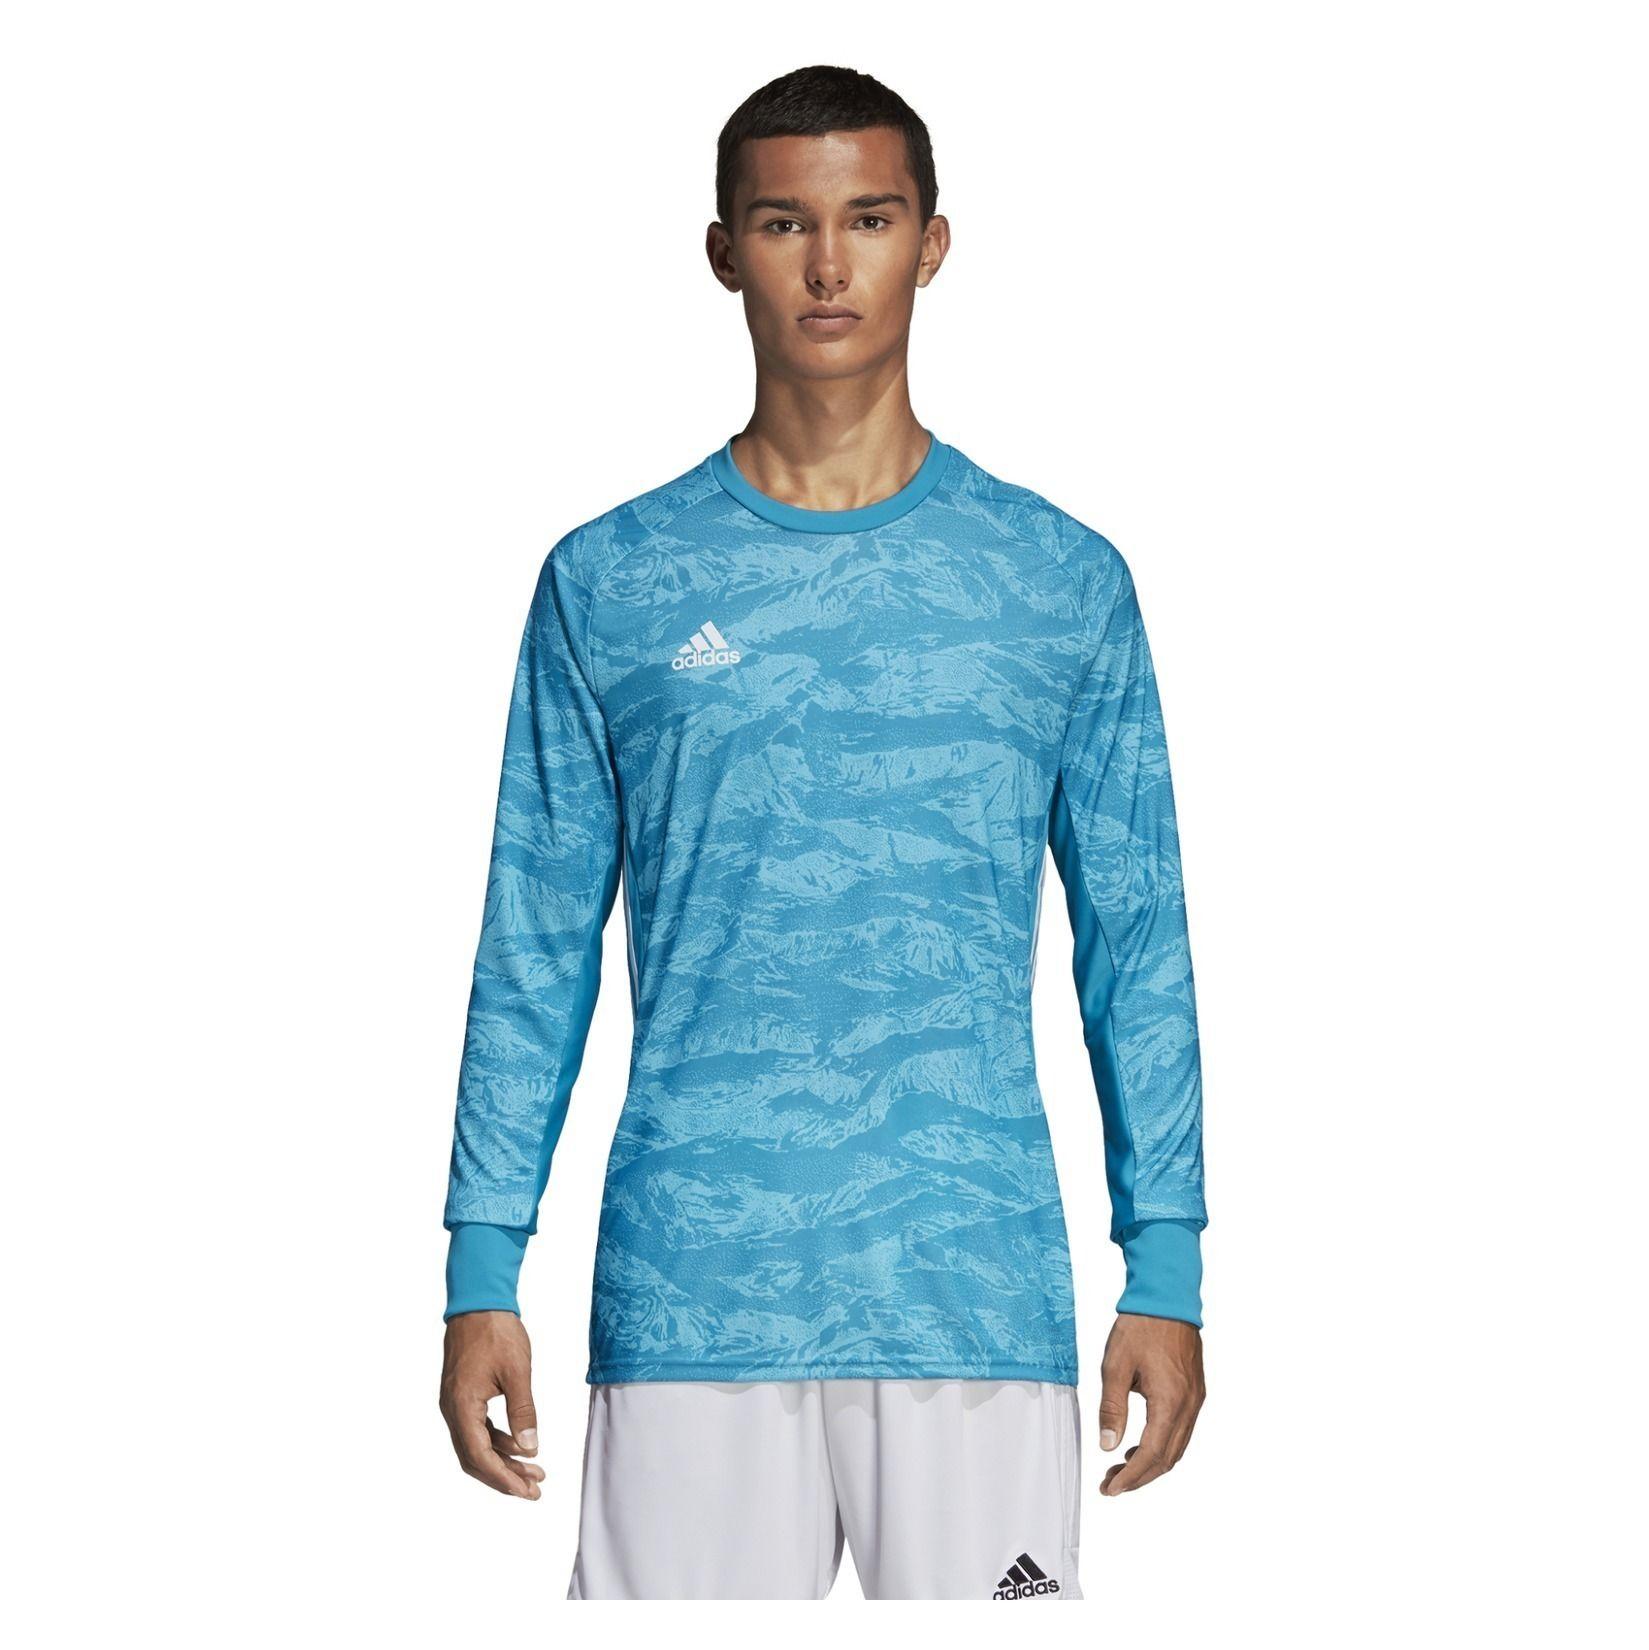 Adidas Adipro 18 Short Sleeve Goalkeeper Jersey Sale Online, 50% OFF |  sportsregras.com